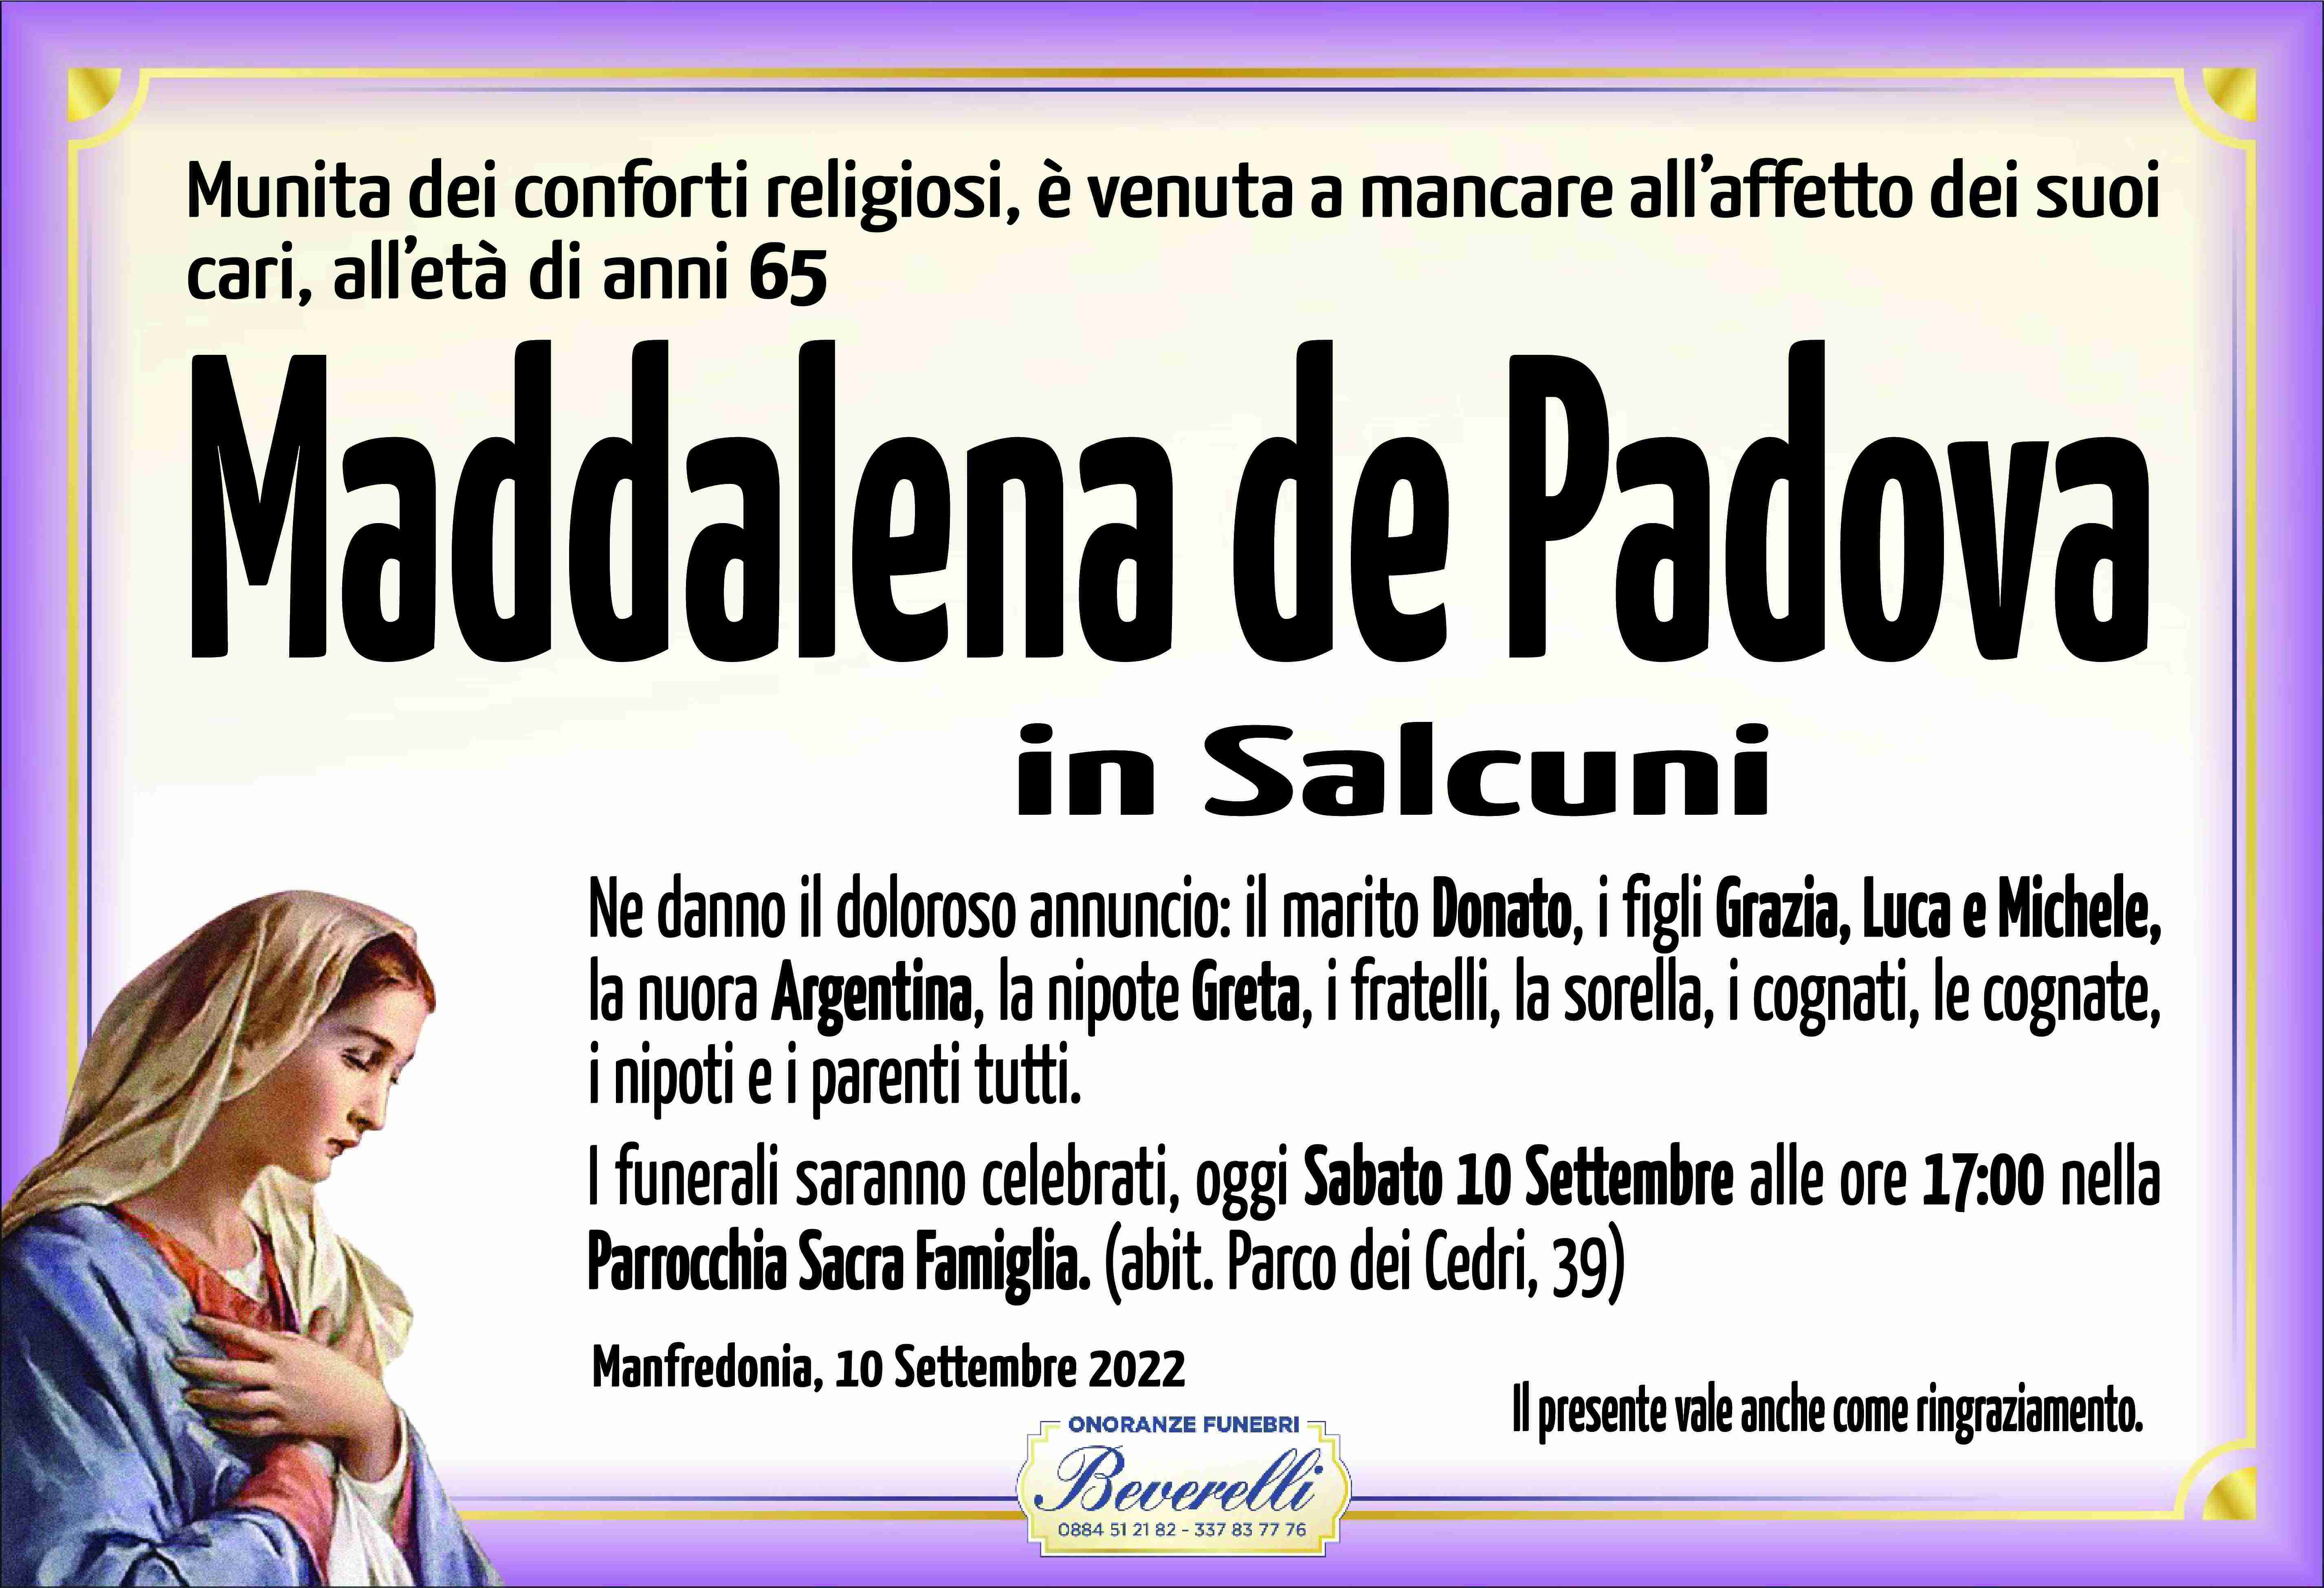 Maddalena de Padova